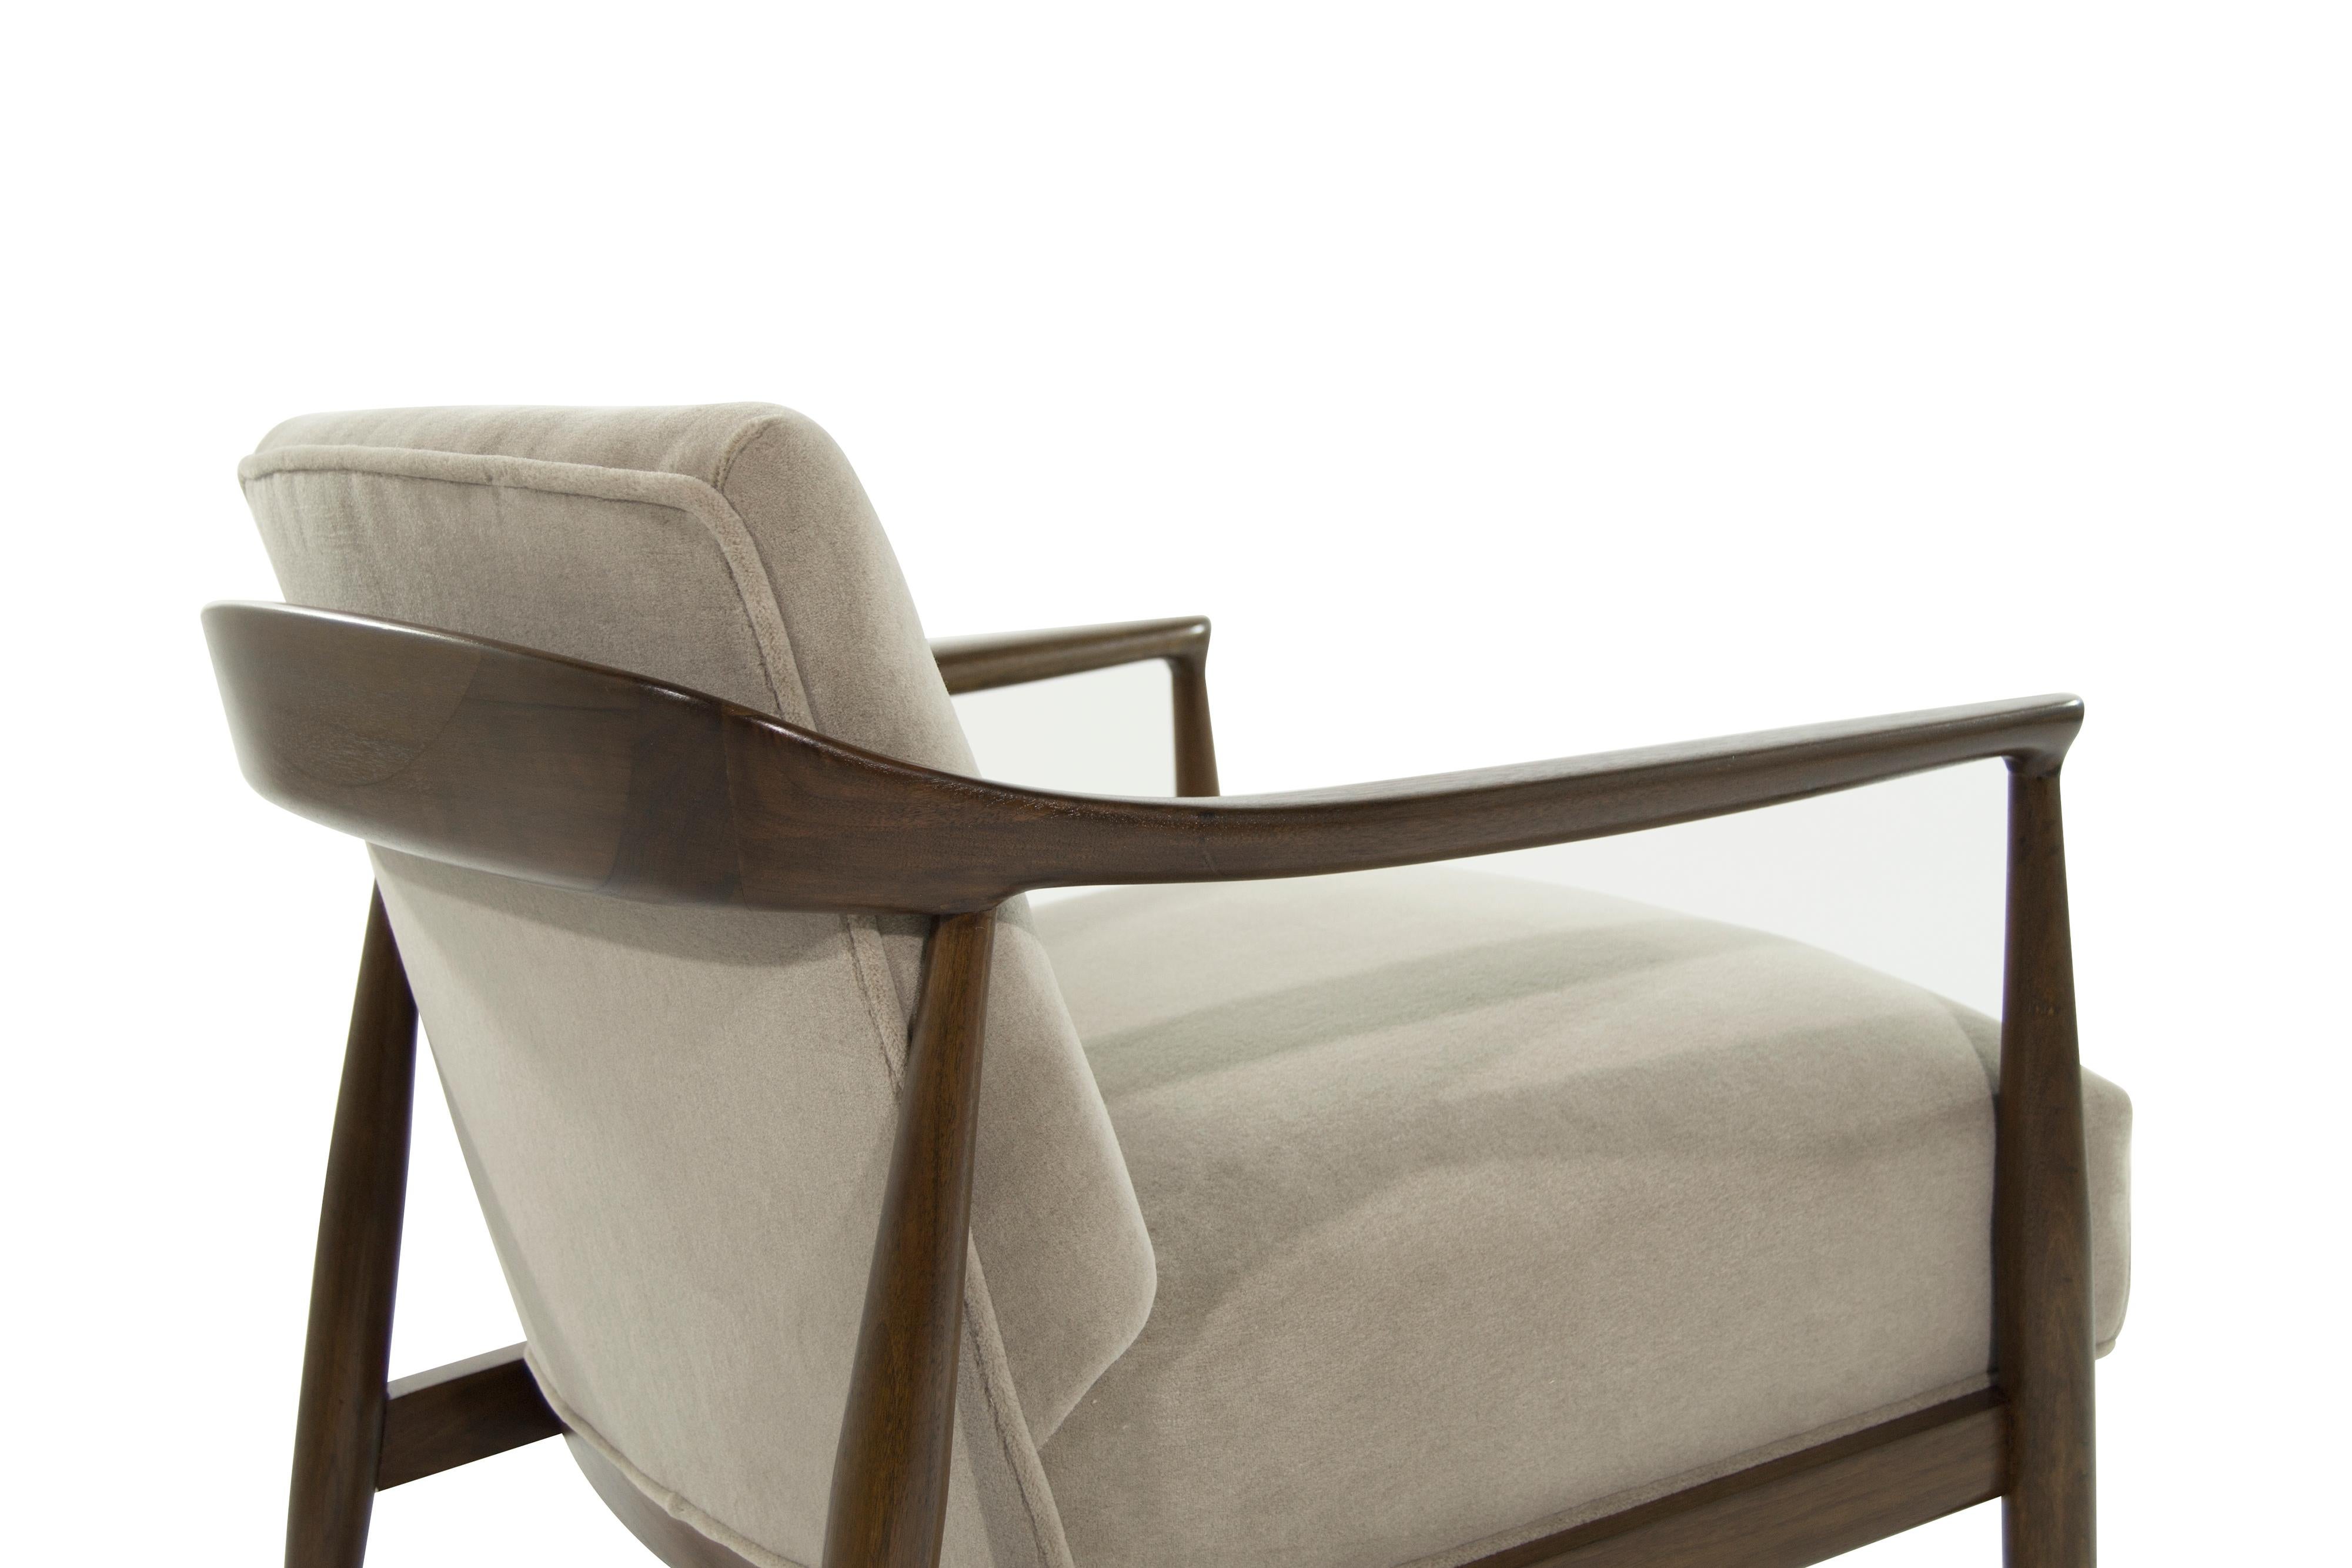 20th Century Sculptural Danish Modern Lounge Chairs, 1950s